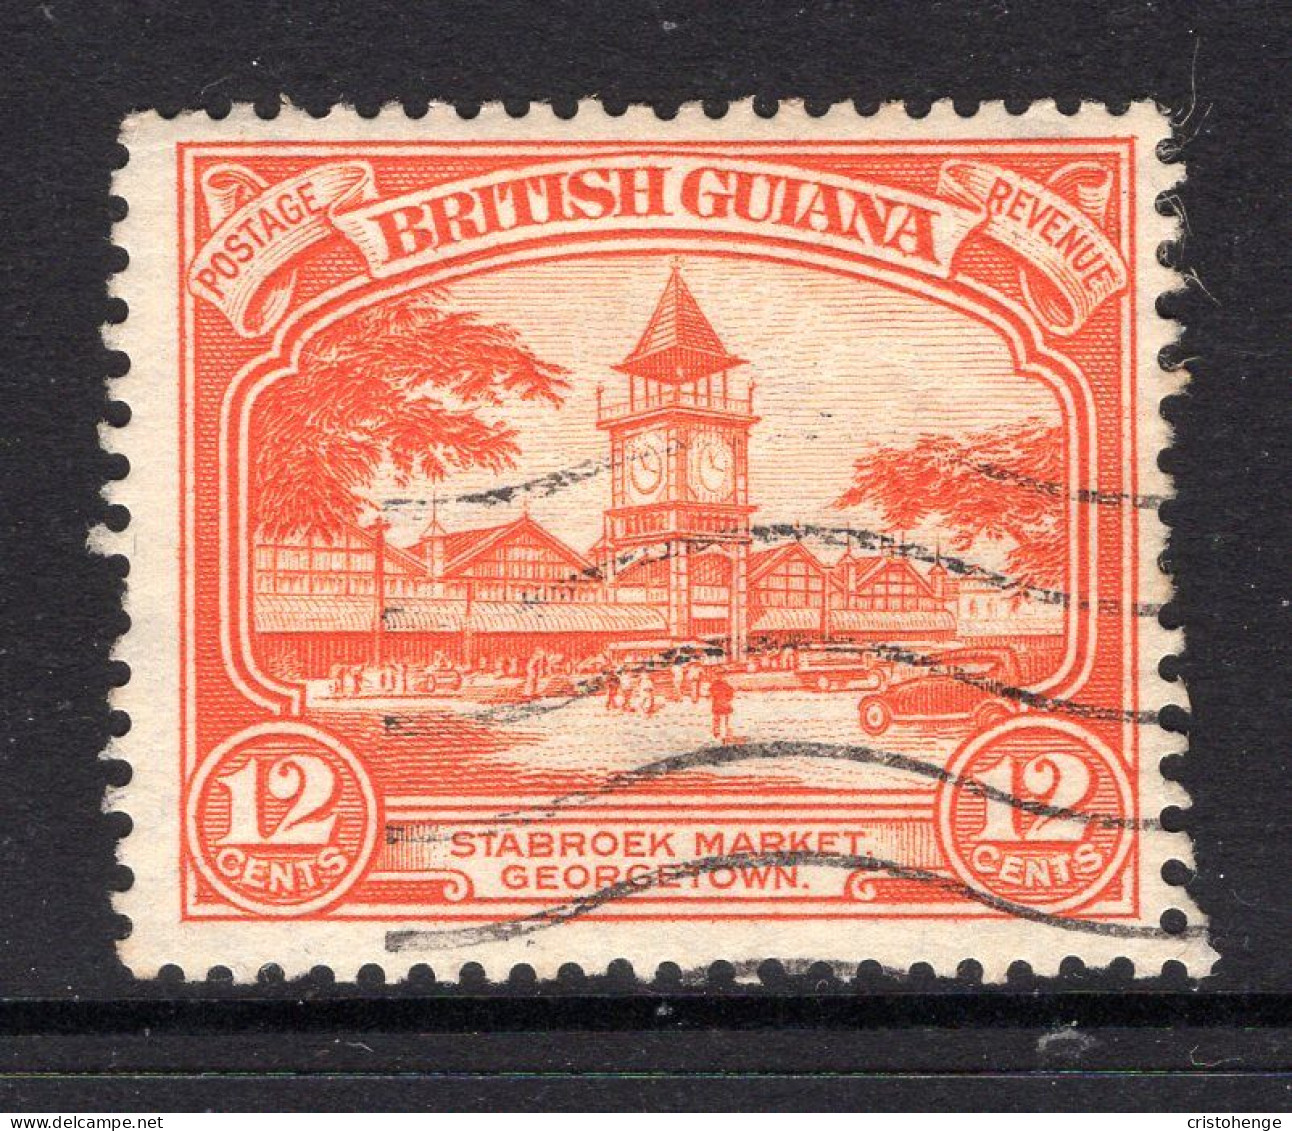 British Guiana 1934-51 KGV Pictorials - 12c Stabroek Market - P.12½ - Used (SG 293) - British Guiana (...-1966)